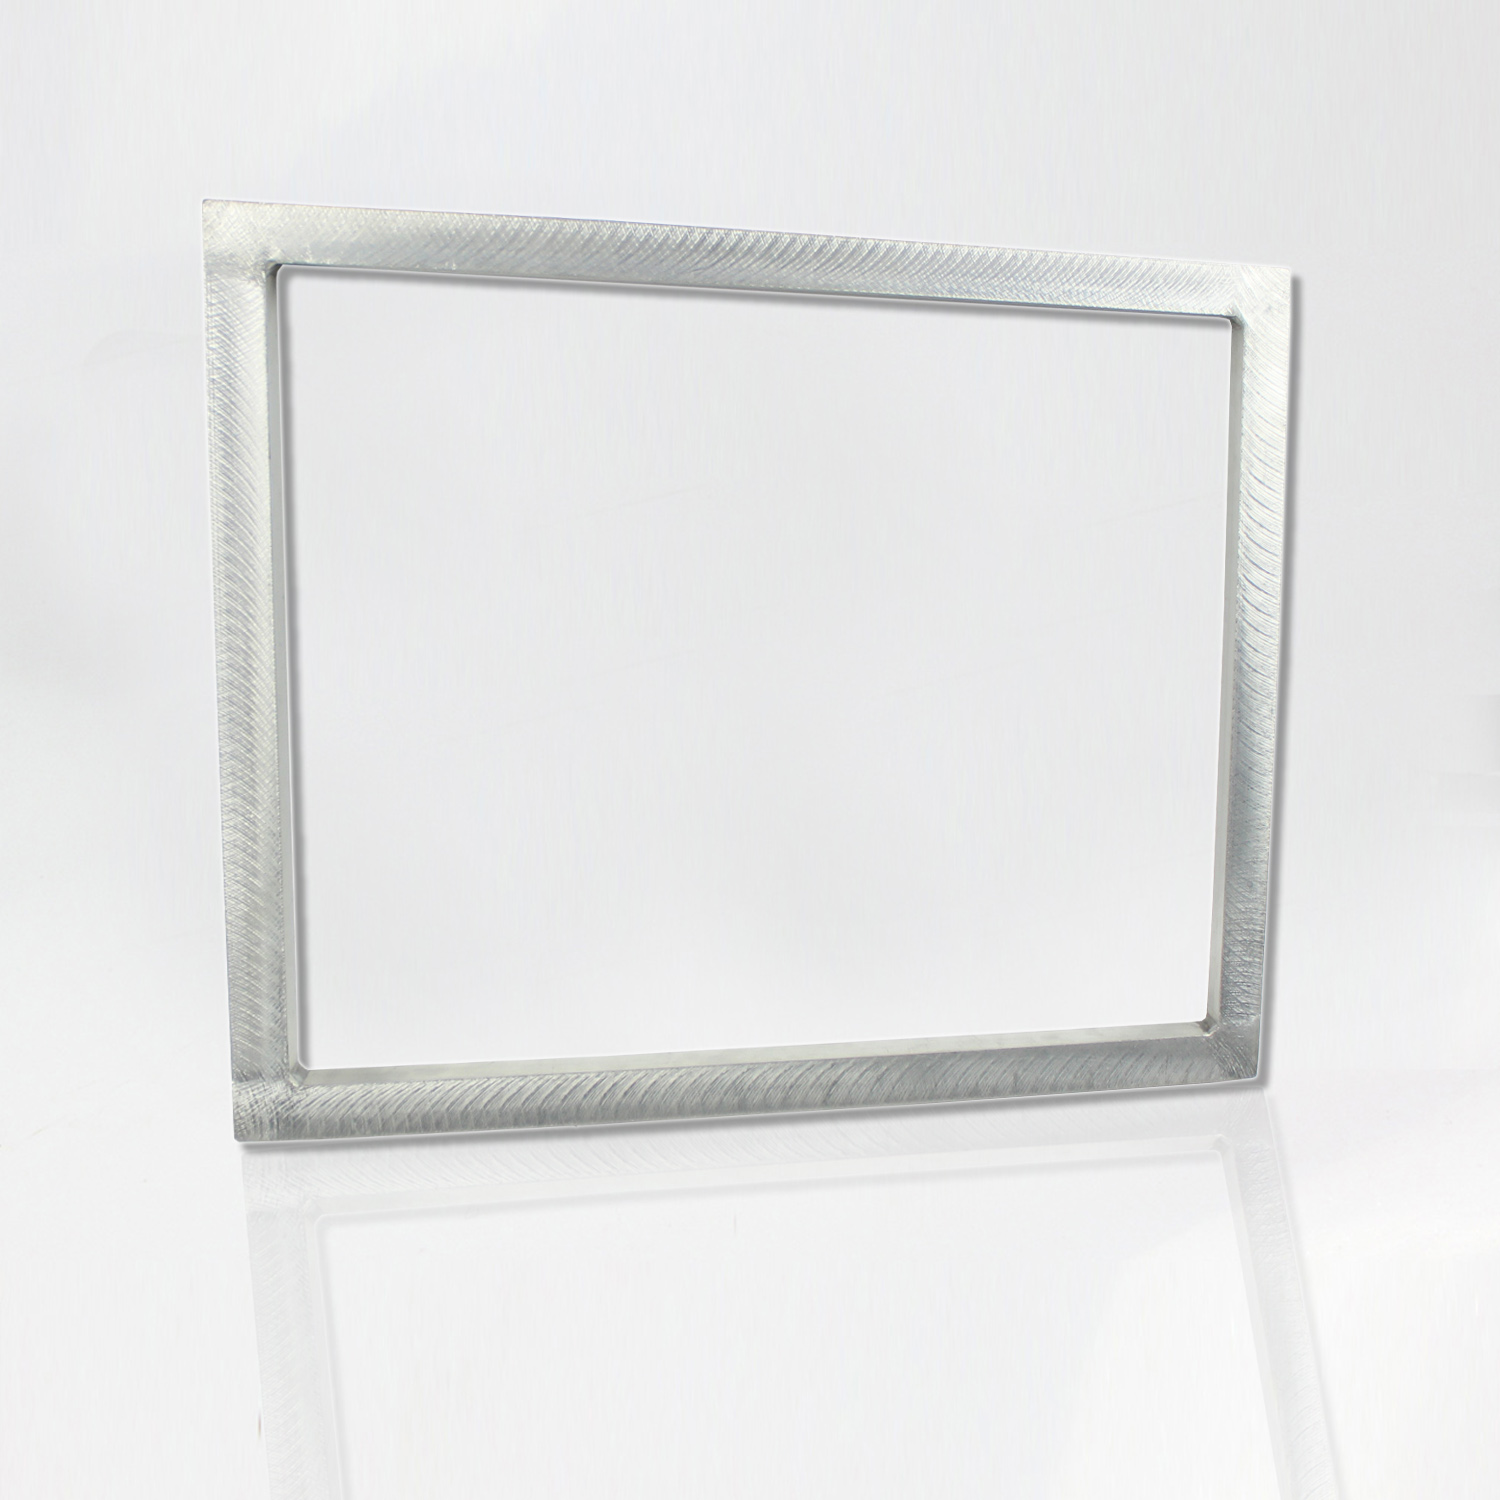 2017 wholesale priceNylon Fabric Mesh -
 Aluminum Frame 12″ x 16″ (frame only) – Jiamei